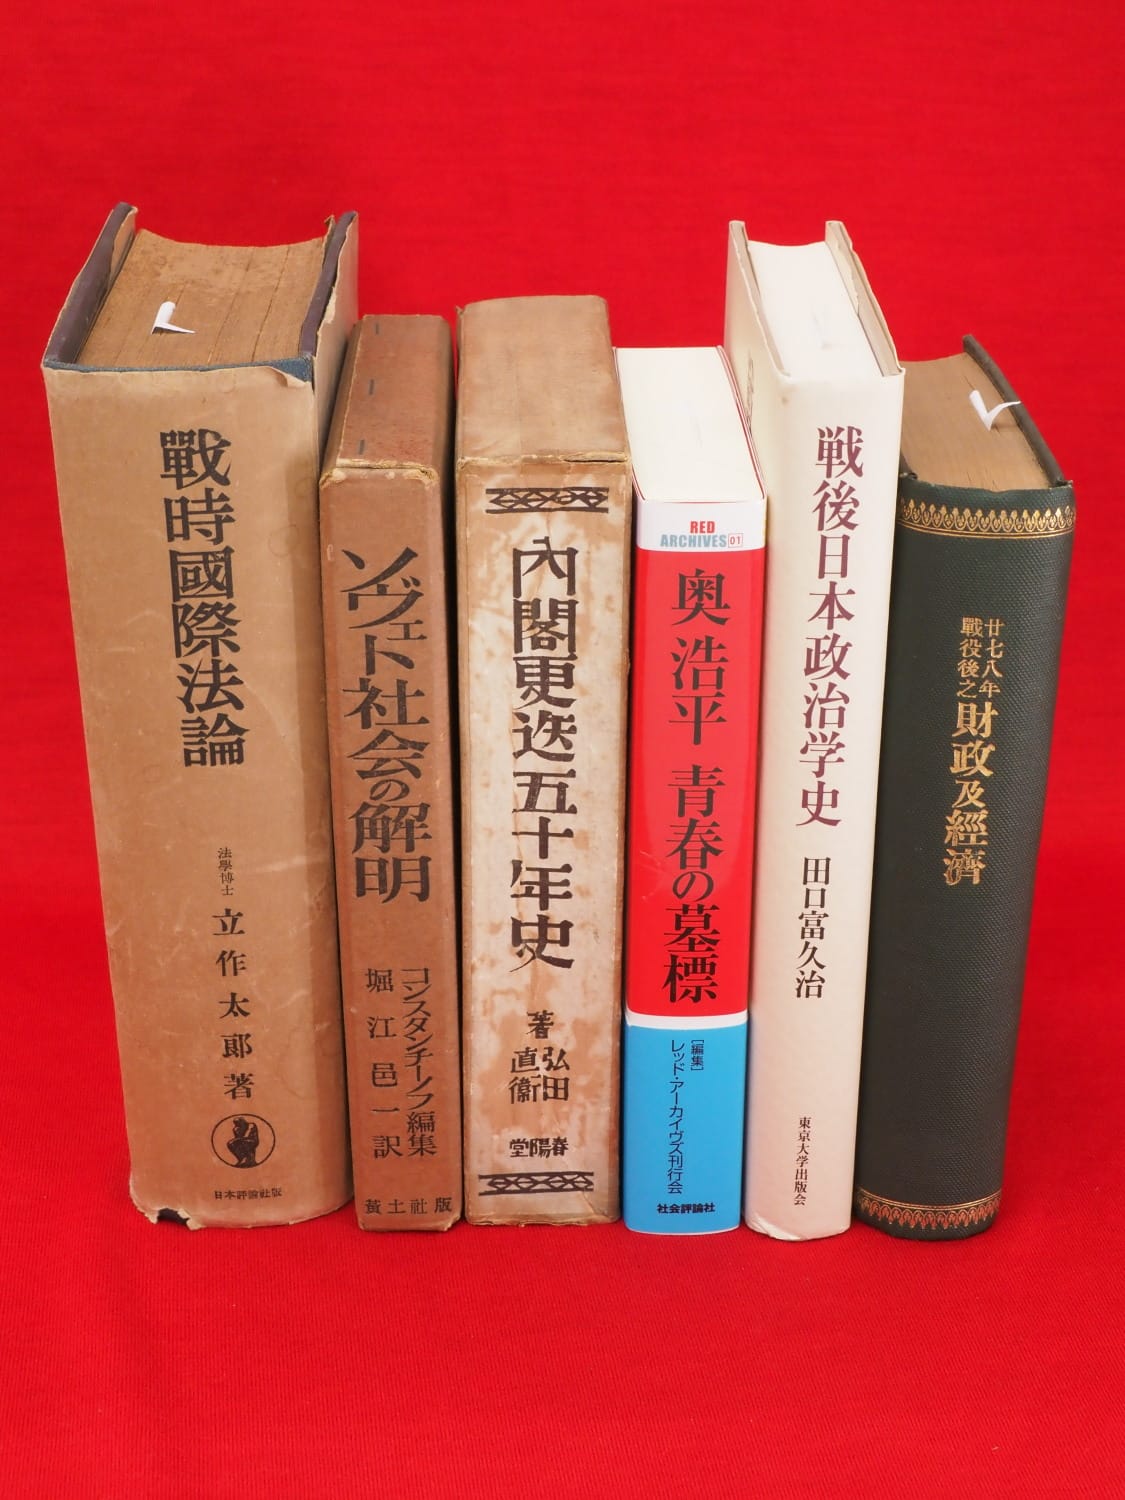 岩波書店 シリーズ戦争と社会 5冊組 - 人文/社会